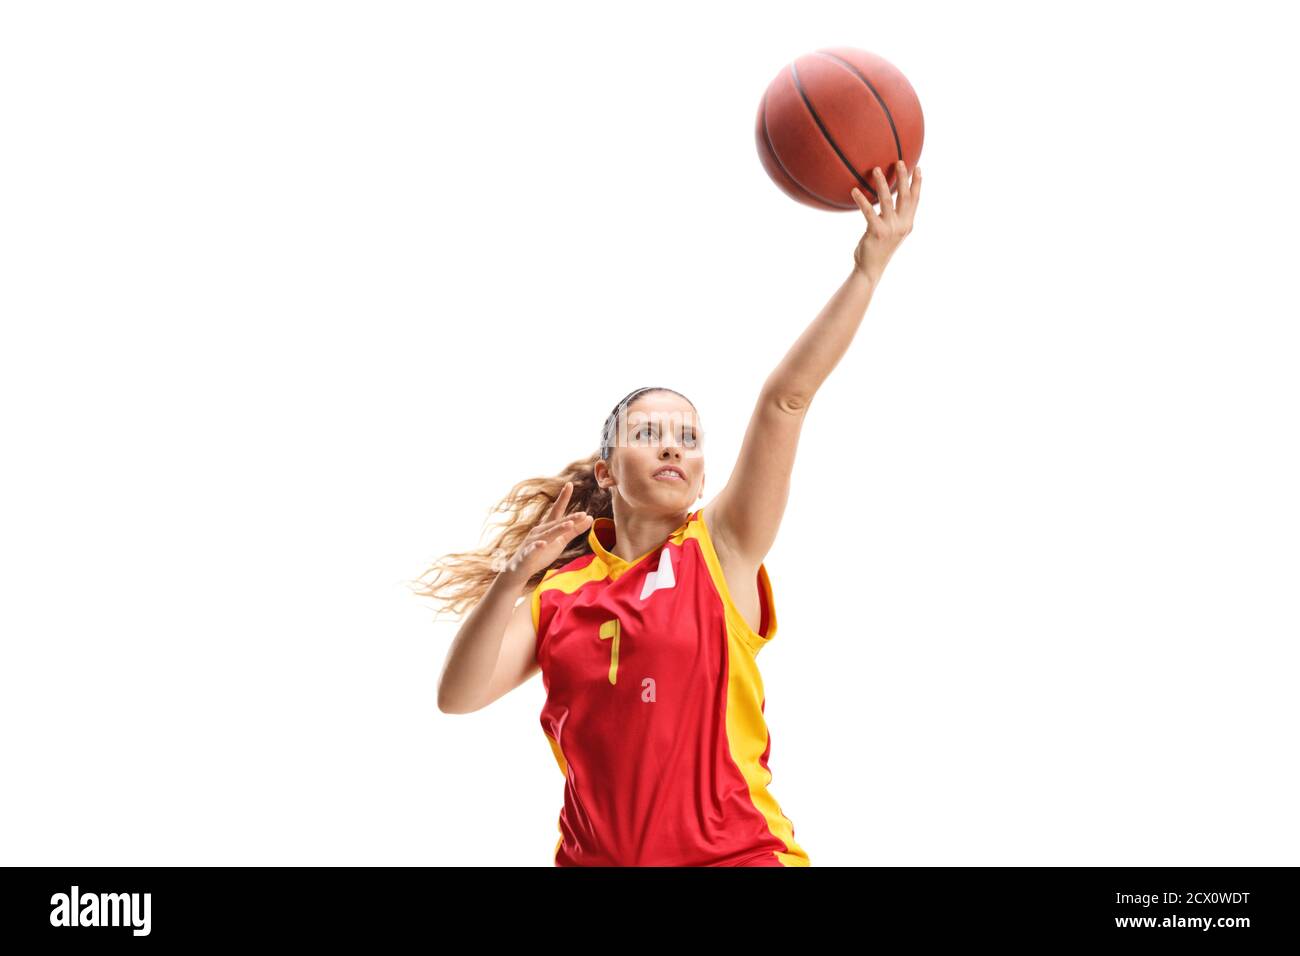 Female basketball player doing layup isolated on white background Stock Photo